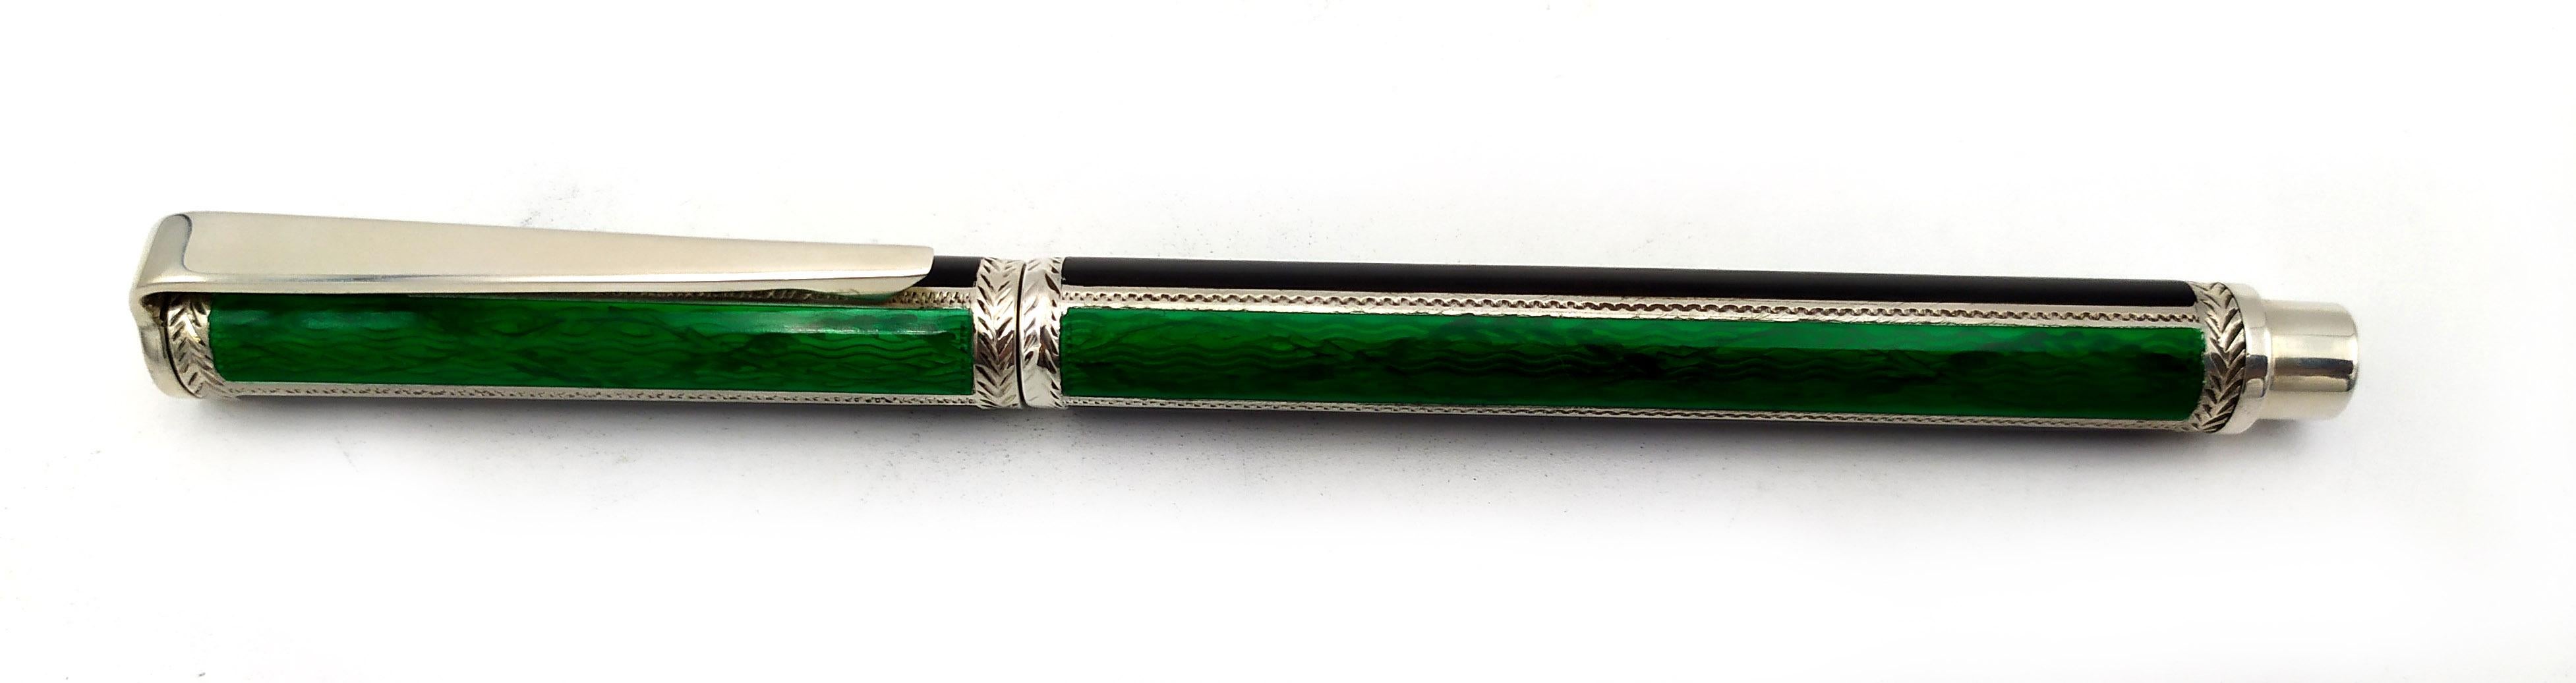 Fountain pen, Ballpoint pen and tray for a Desk Set green enamel Salimbeni  For Sale 2